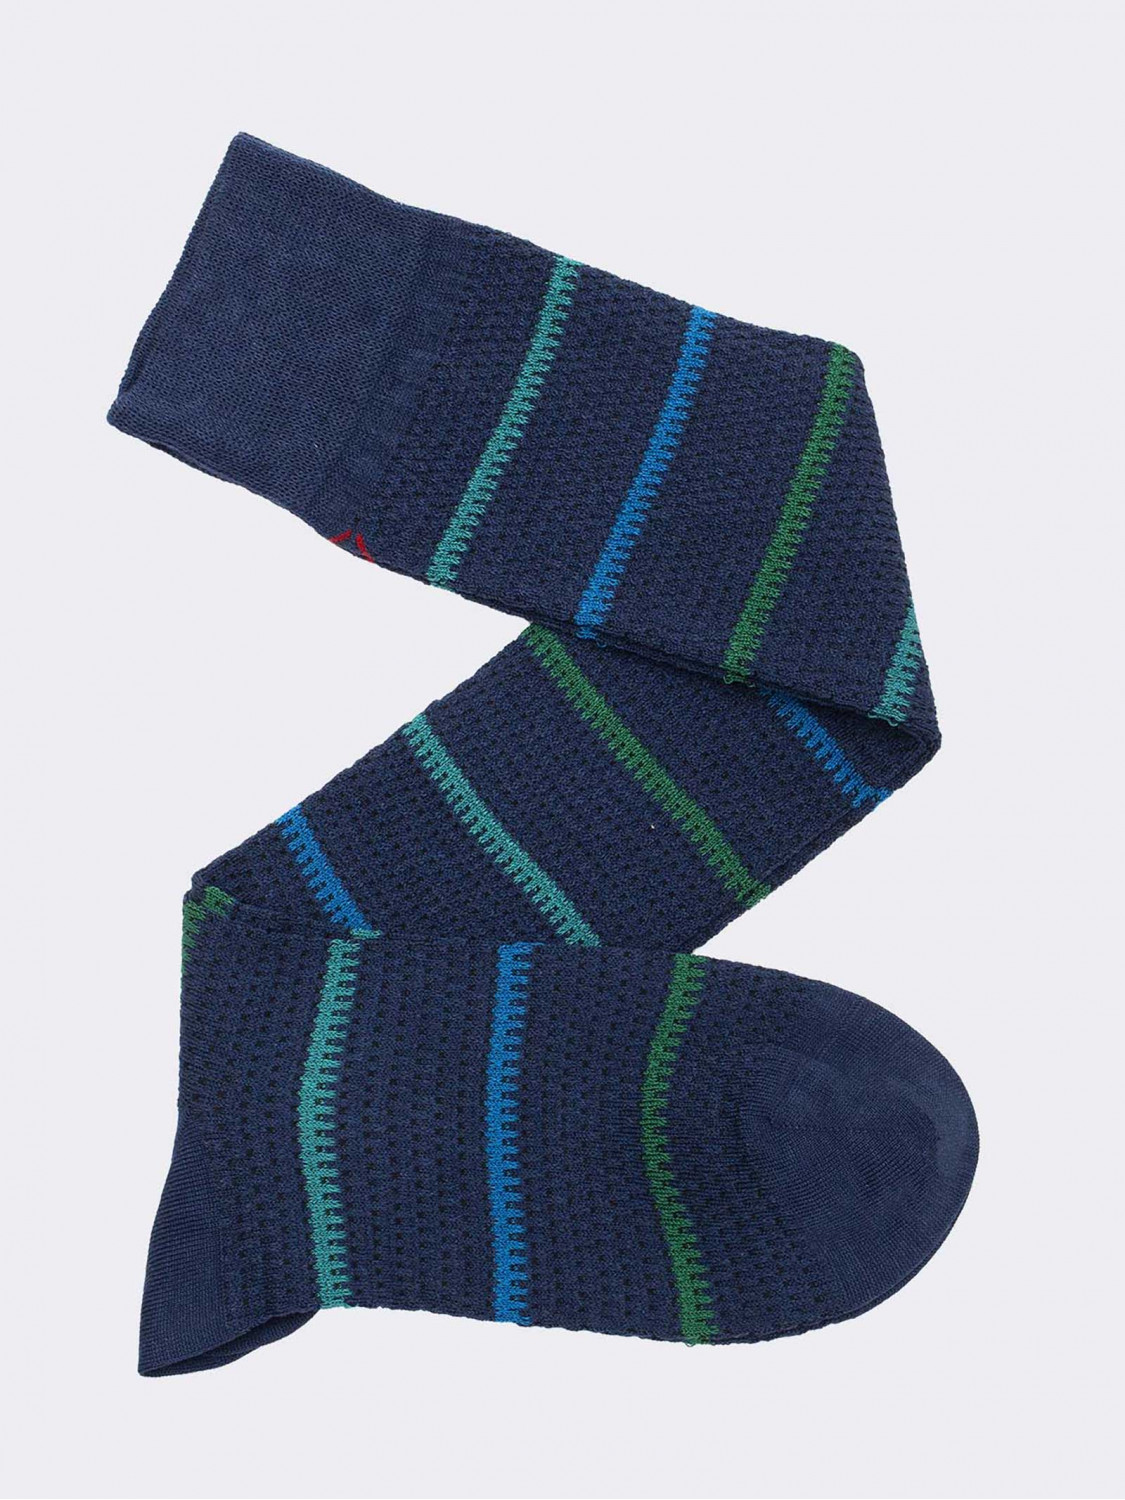 Men's Knee - High Socks, Striped Piquet Pattern in Cotton